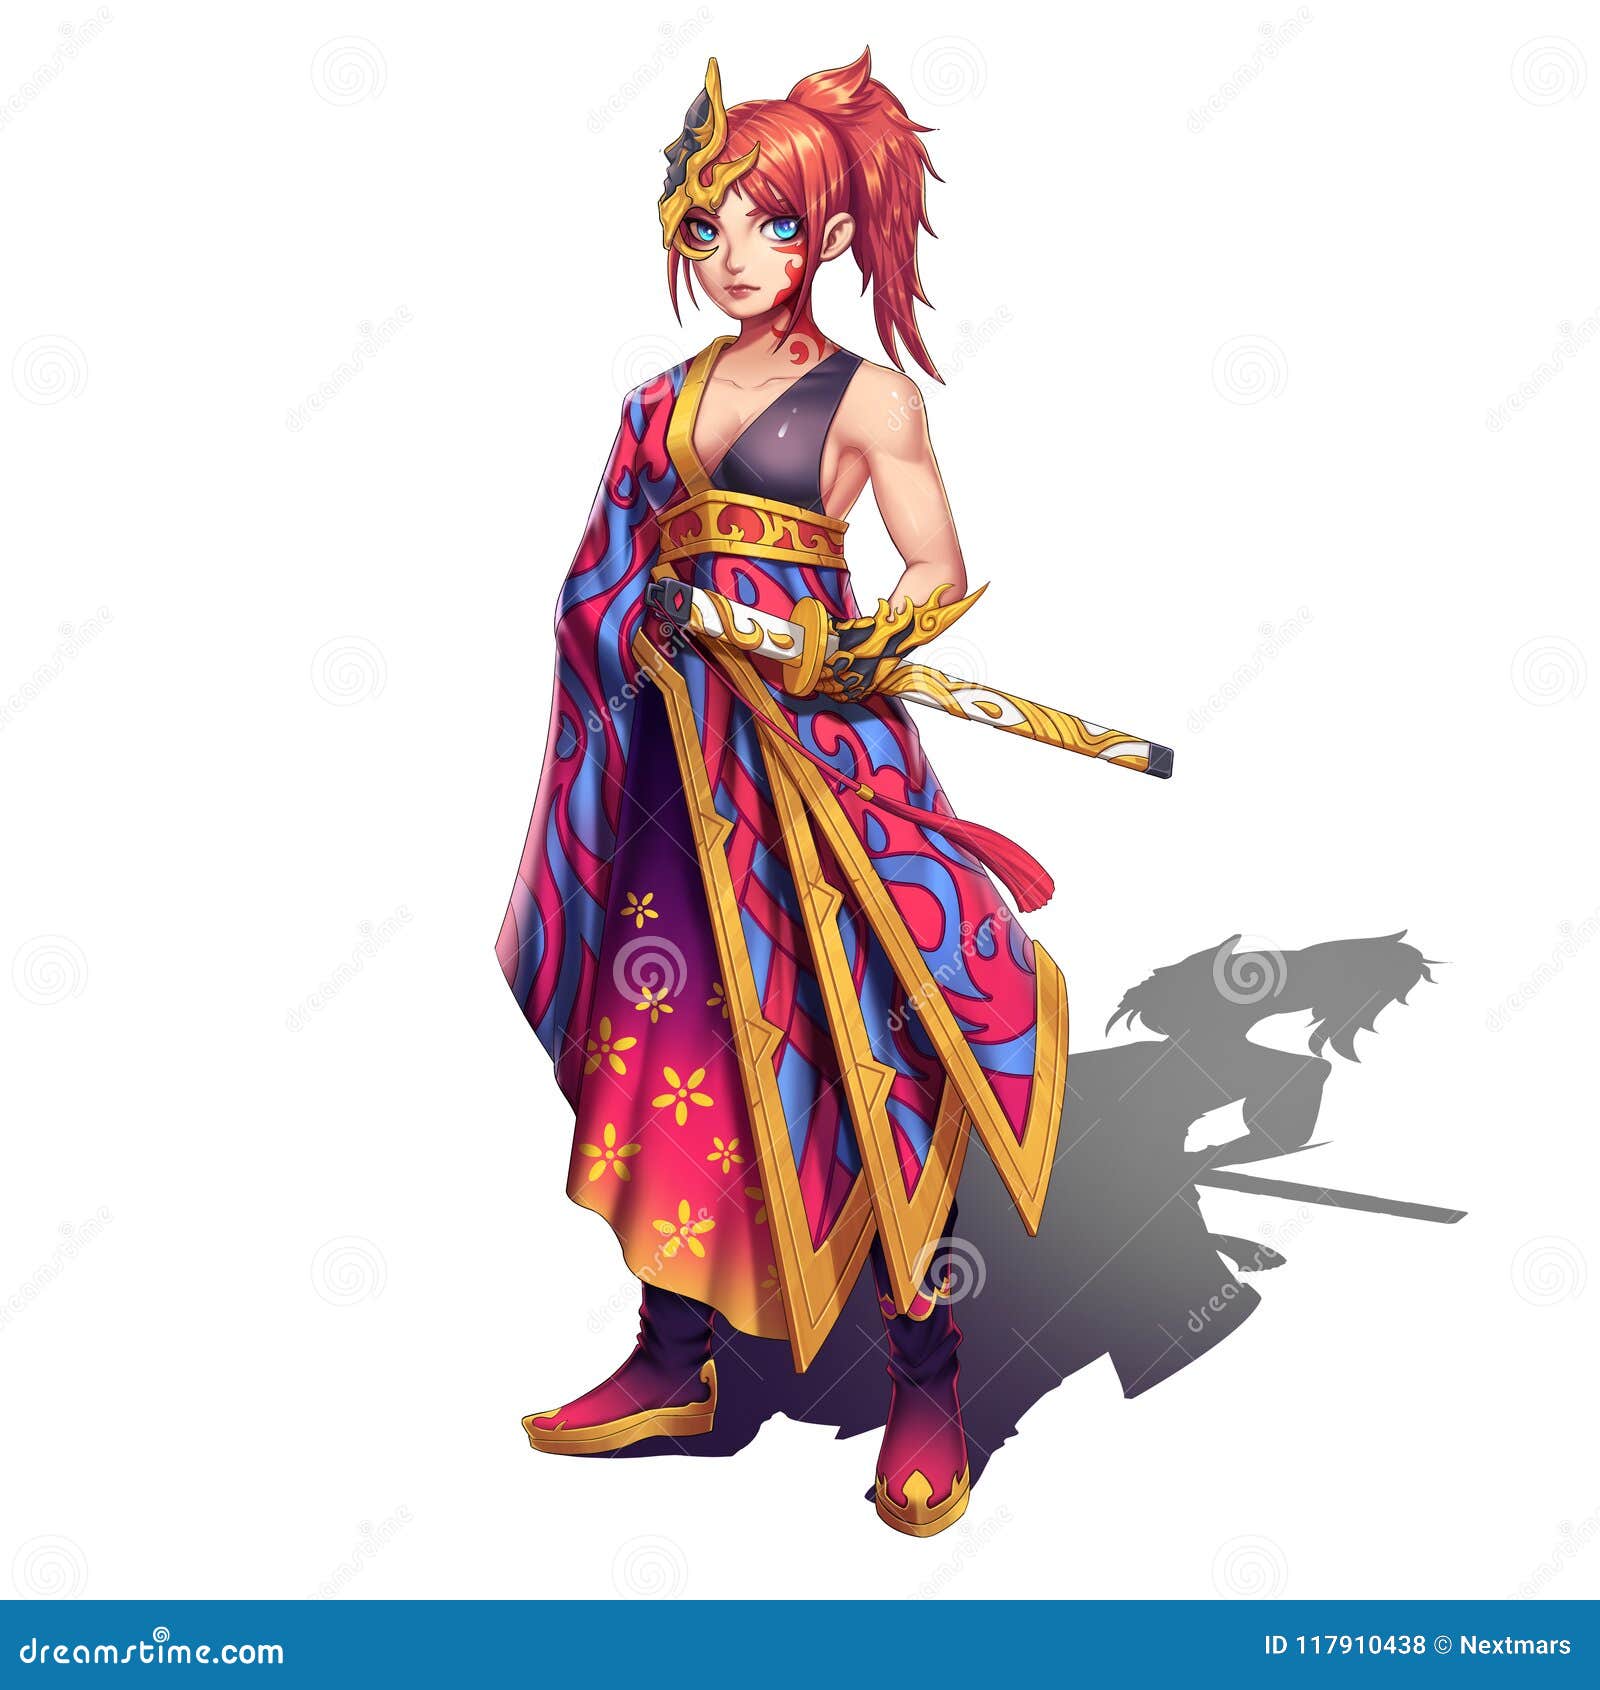 Anime Samurai HD Wallpaper by MISSILE228